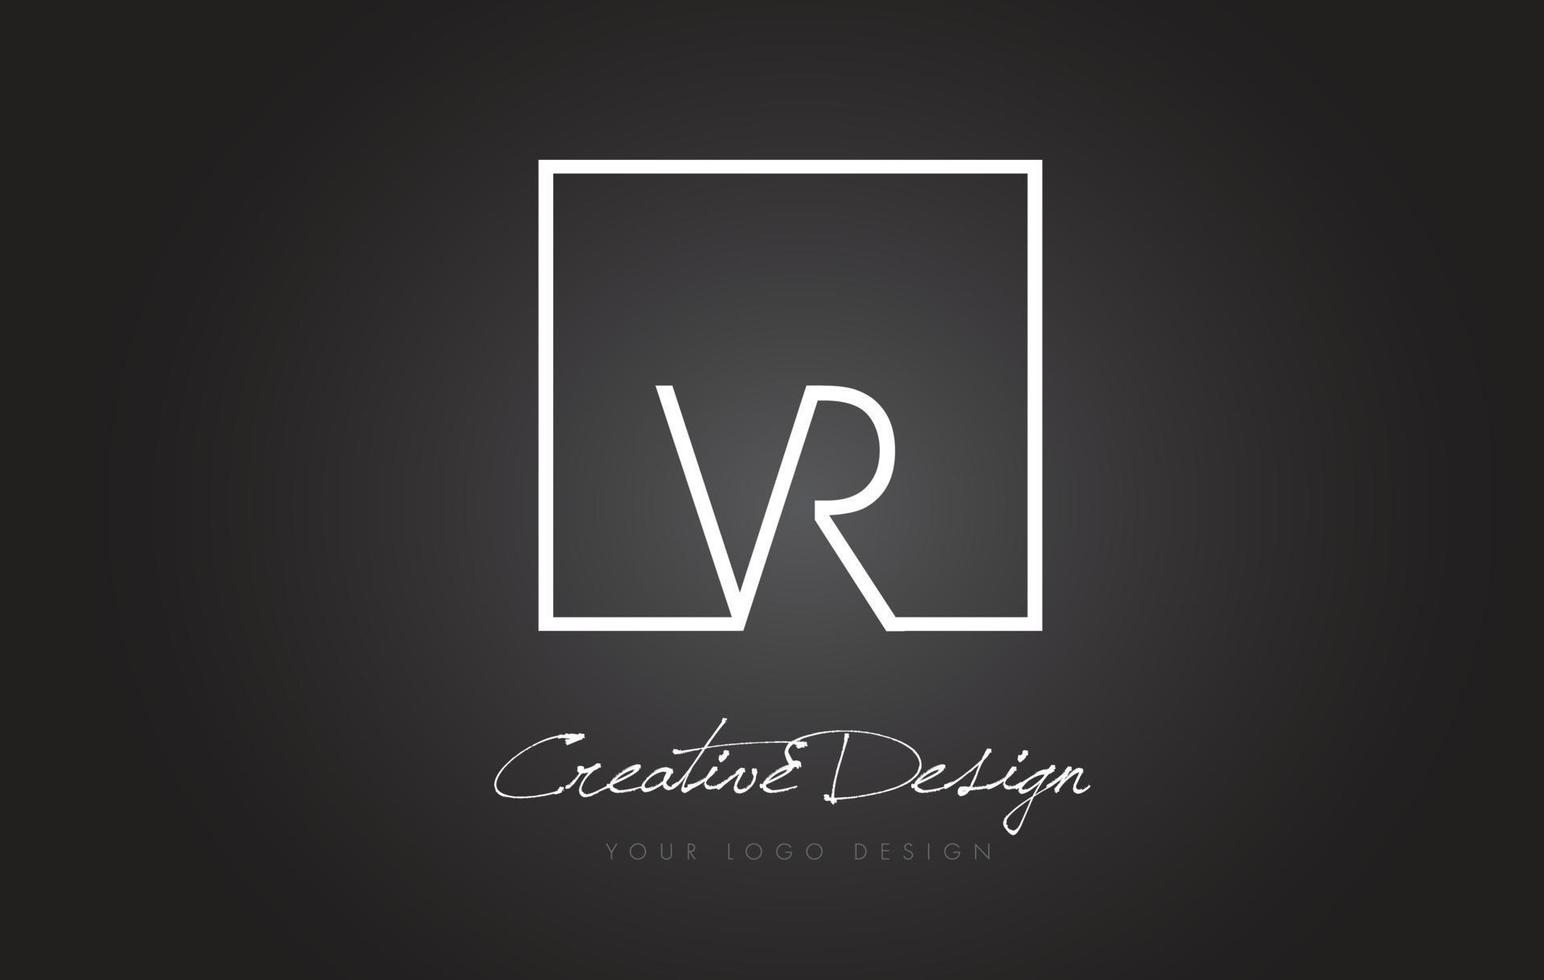 vr vierkante frame letter logo-ontwerp met zwarte en witte kleuren. vector